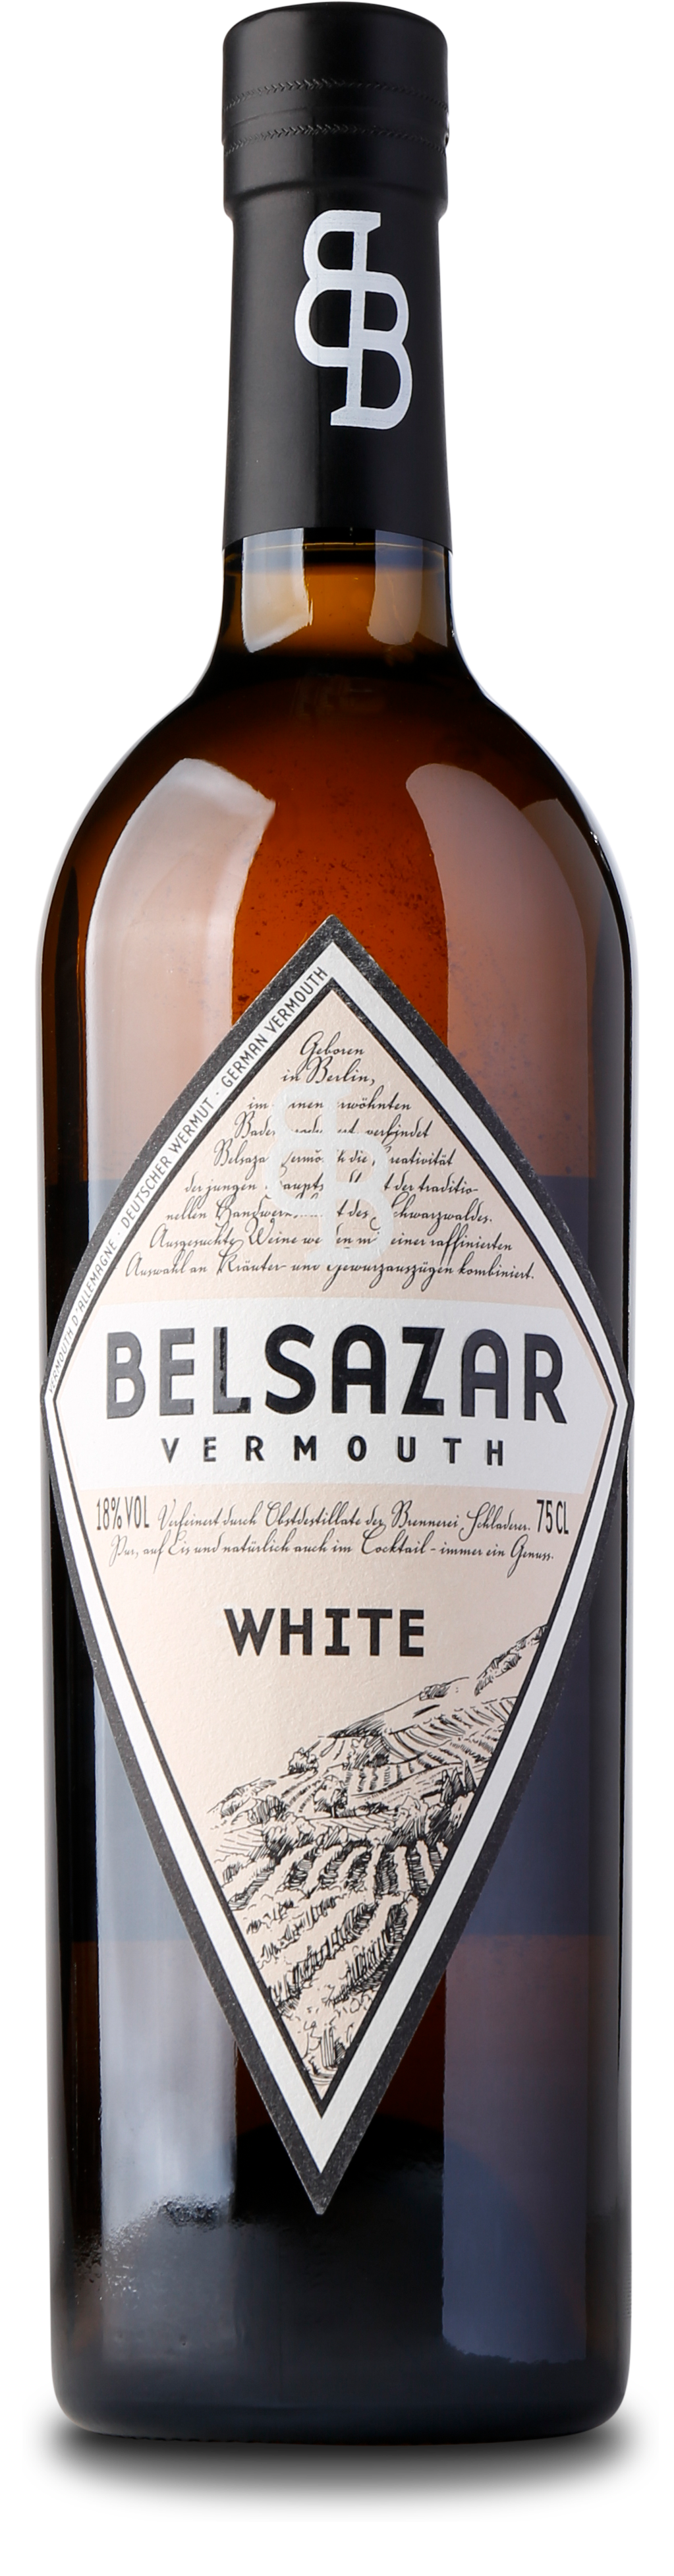 Vermouth fra Belsazar online Køb Belsazar - tysk Vermouth fra